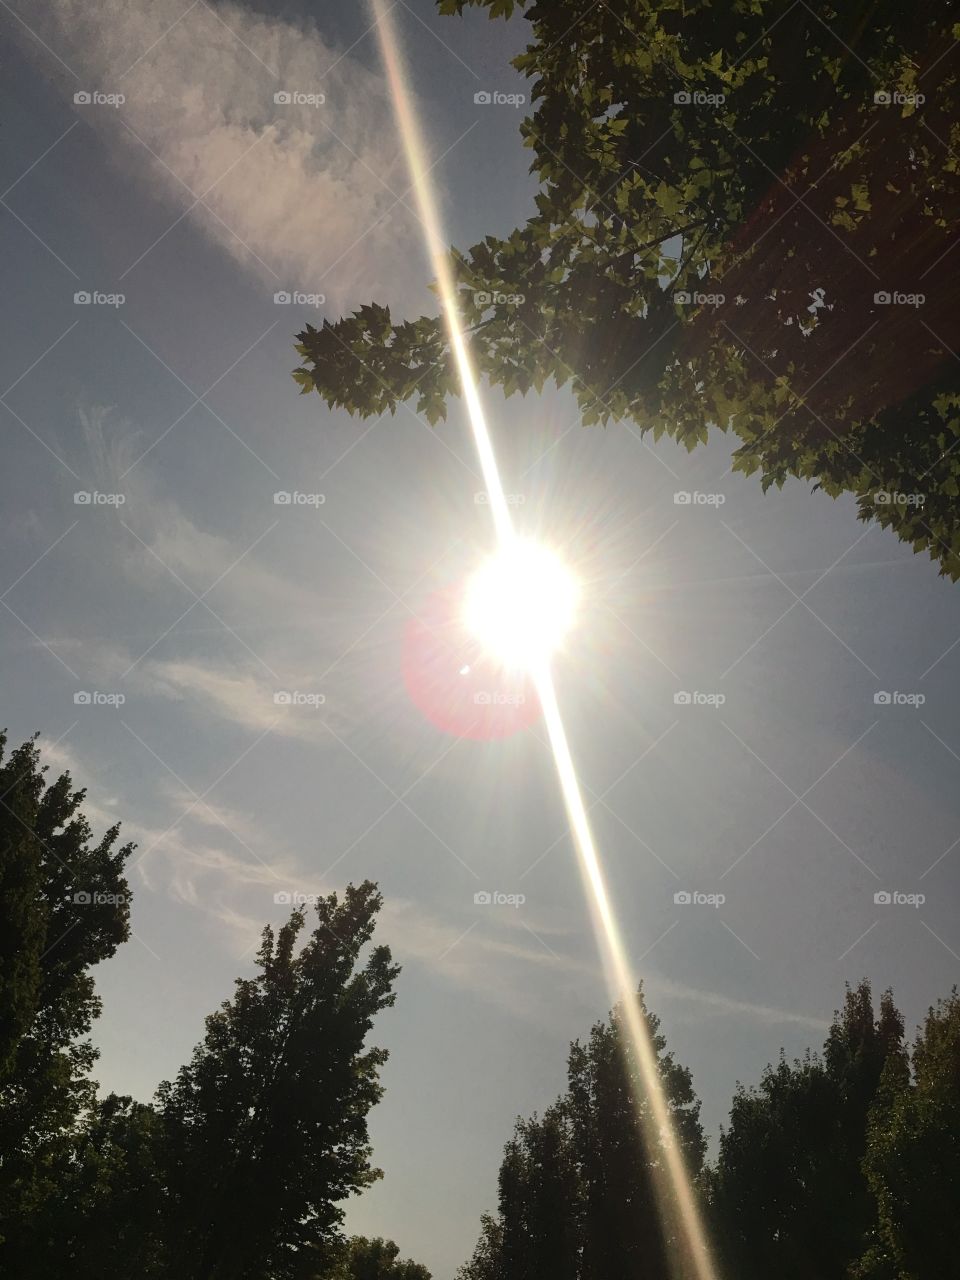 Sun Ray 2 Eclipse 2017
